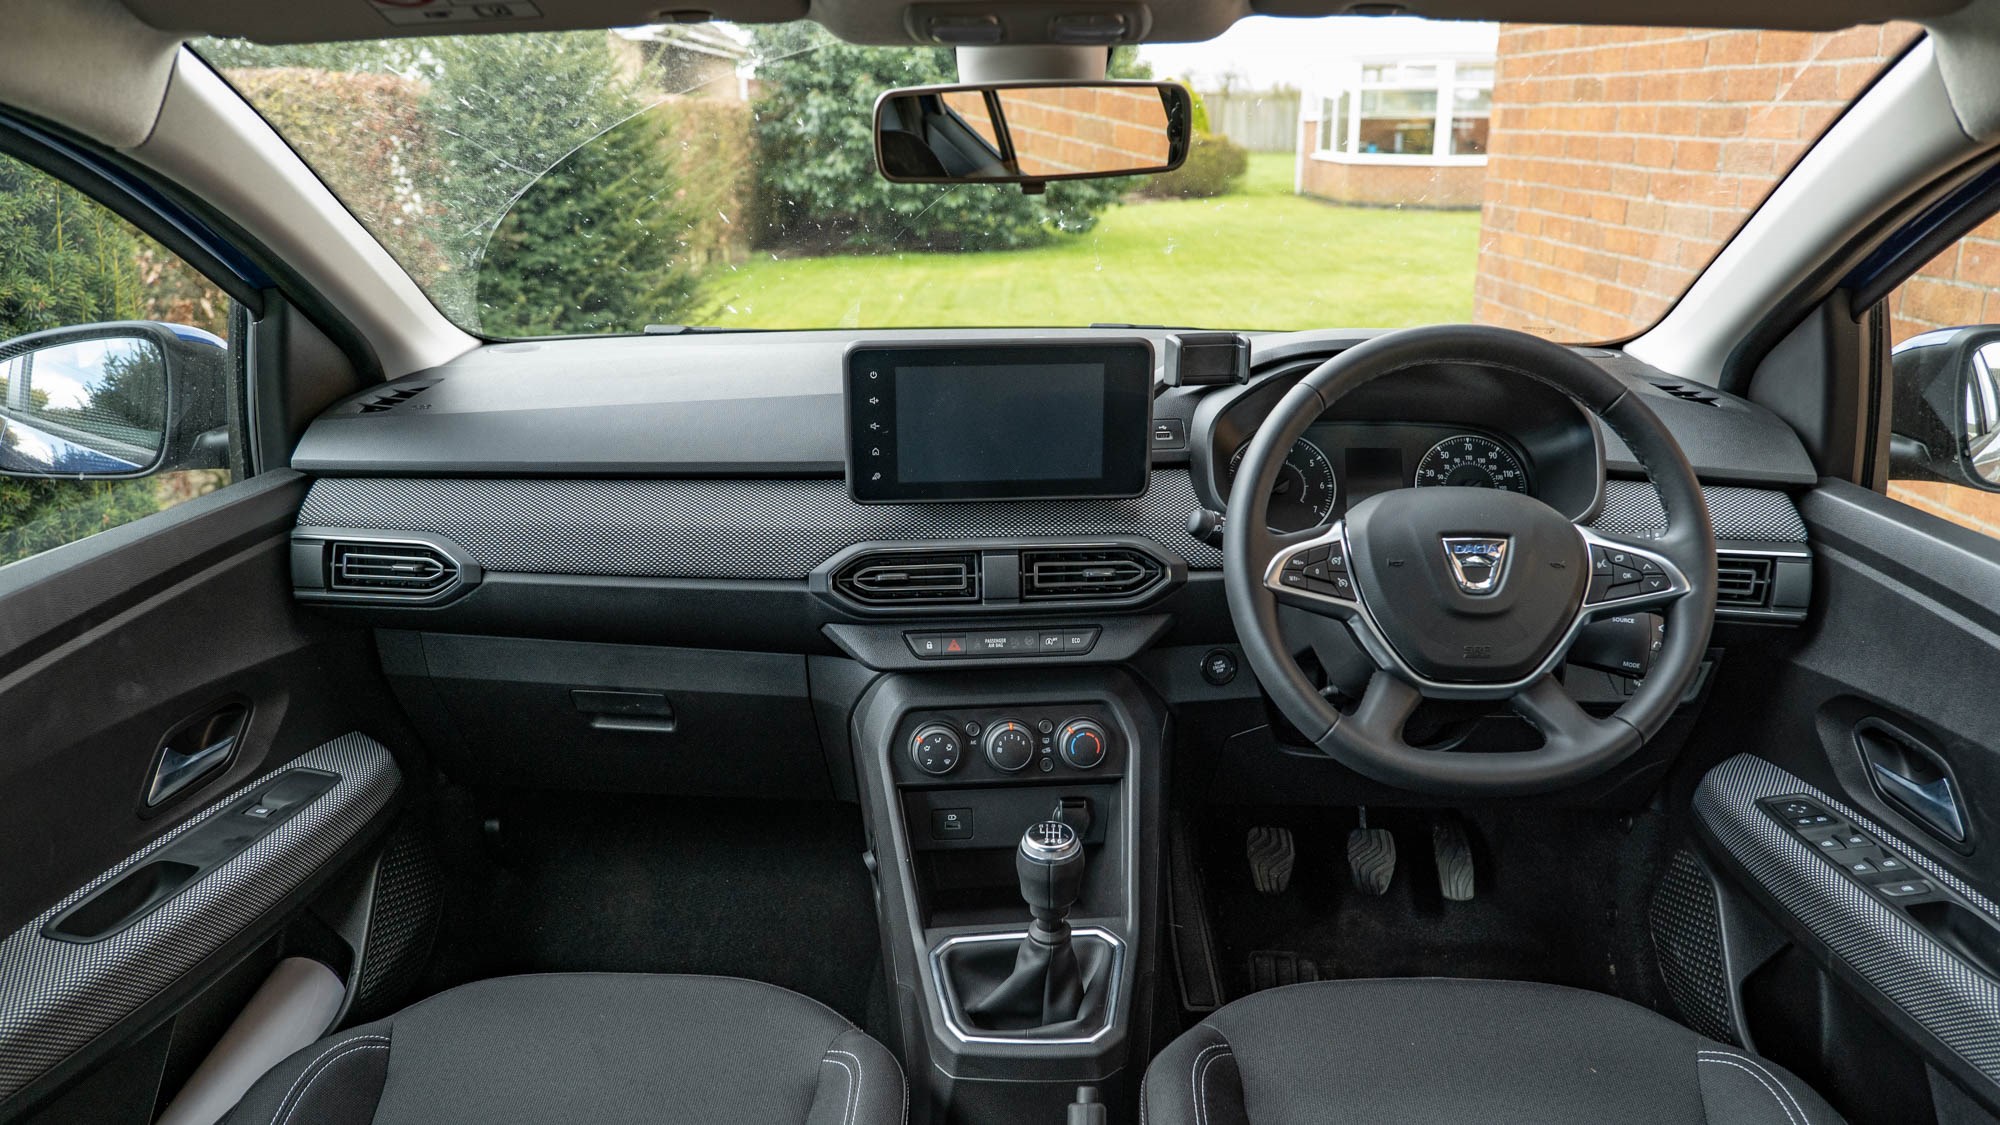 Dacia Sandero Comfort interior, dashboard and infotainment